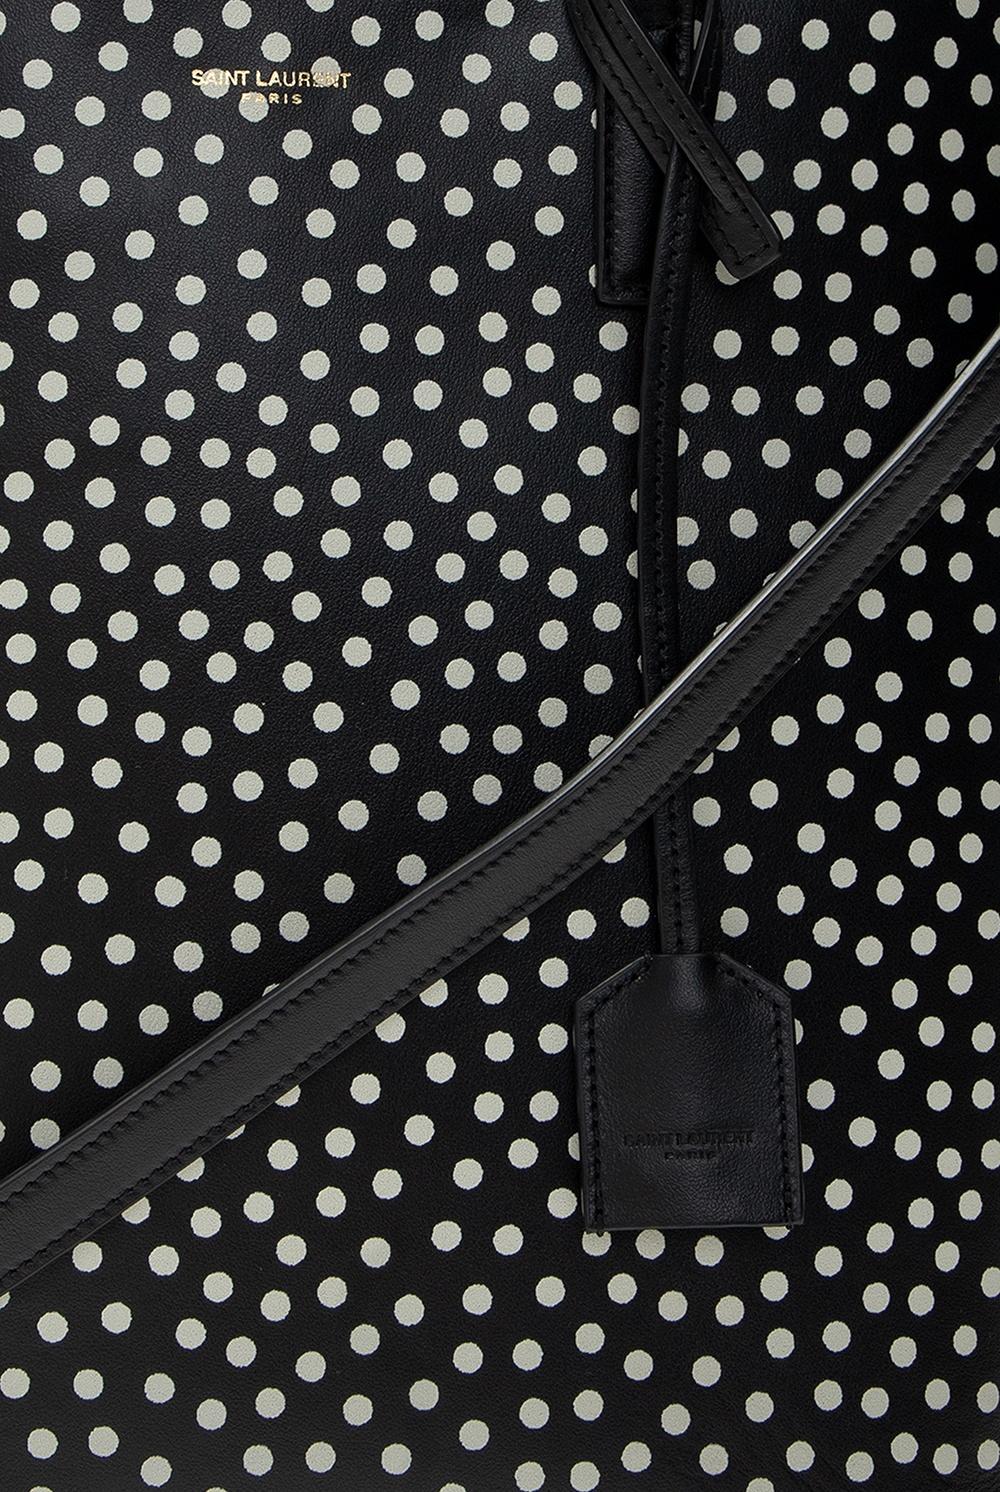 Saint Laurent Soft Leather Black Polka Dot Toy Shopping Bag en vente 3